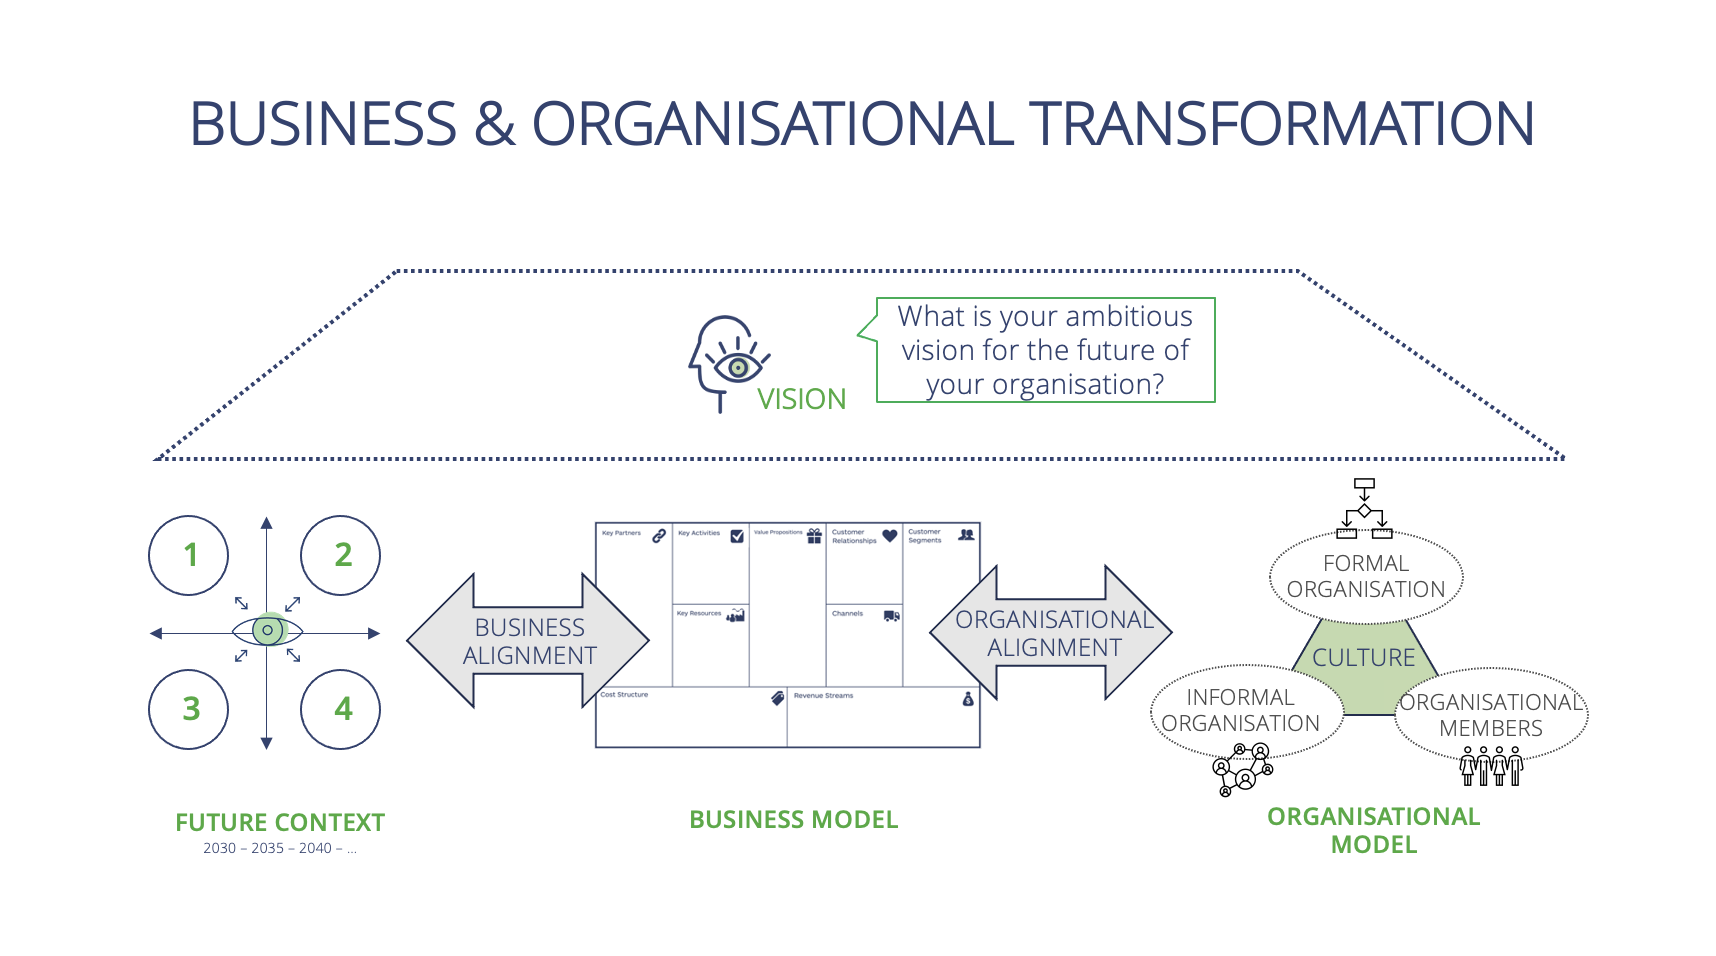 Business & organizational transformation